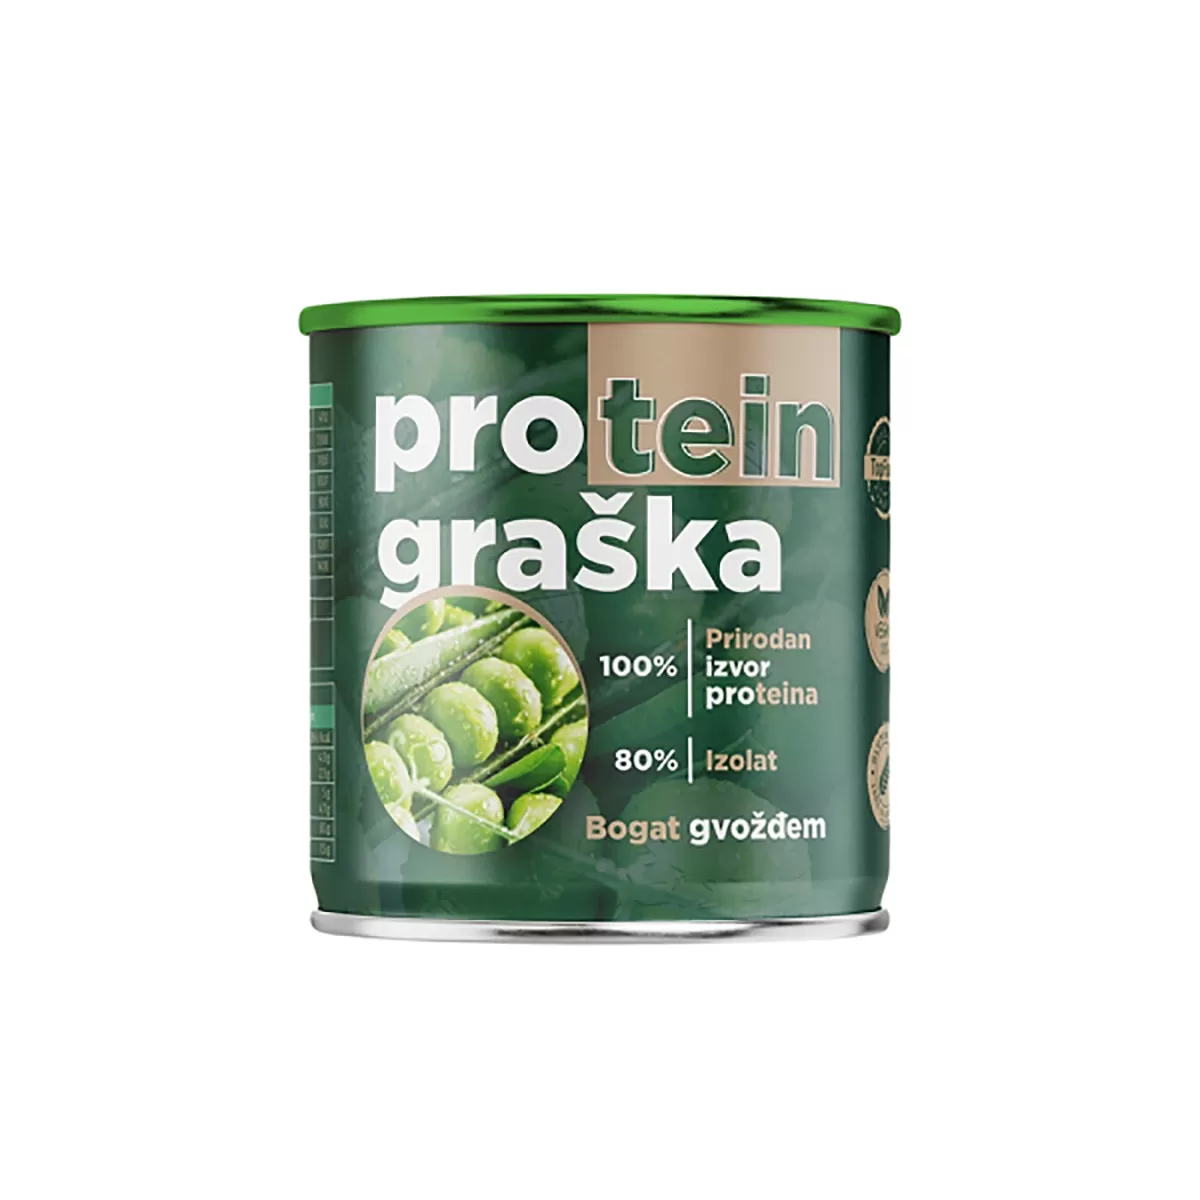 Protein graška Top food, 150g 